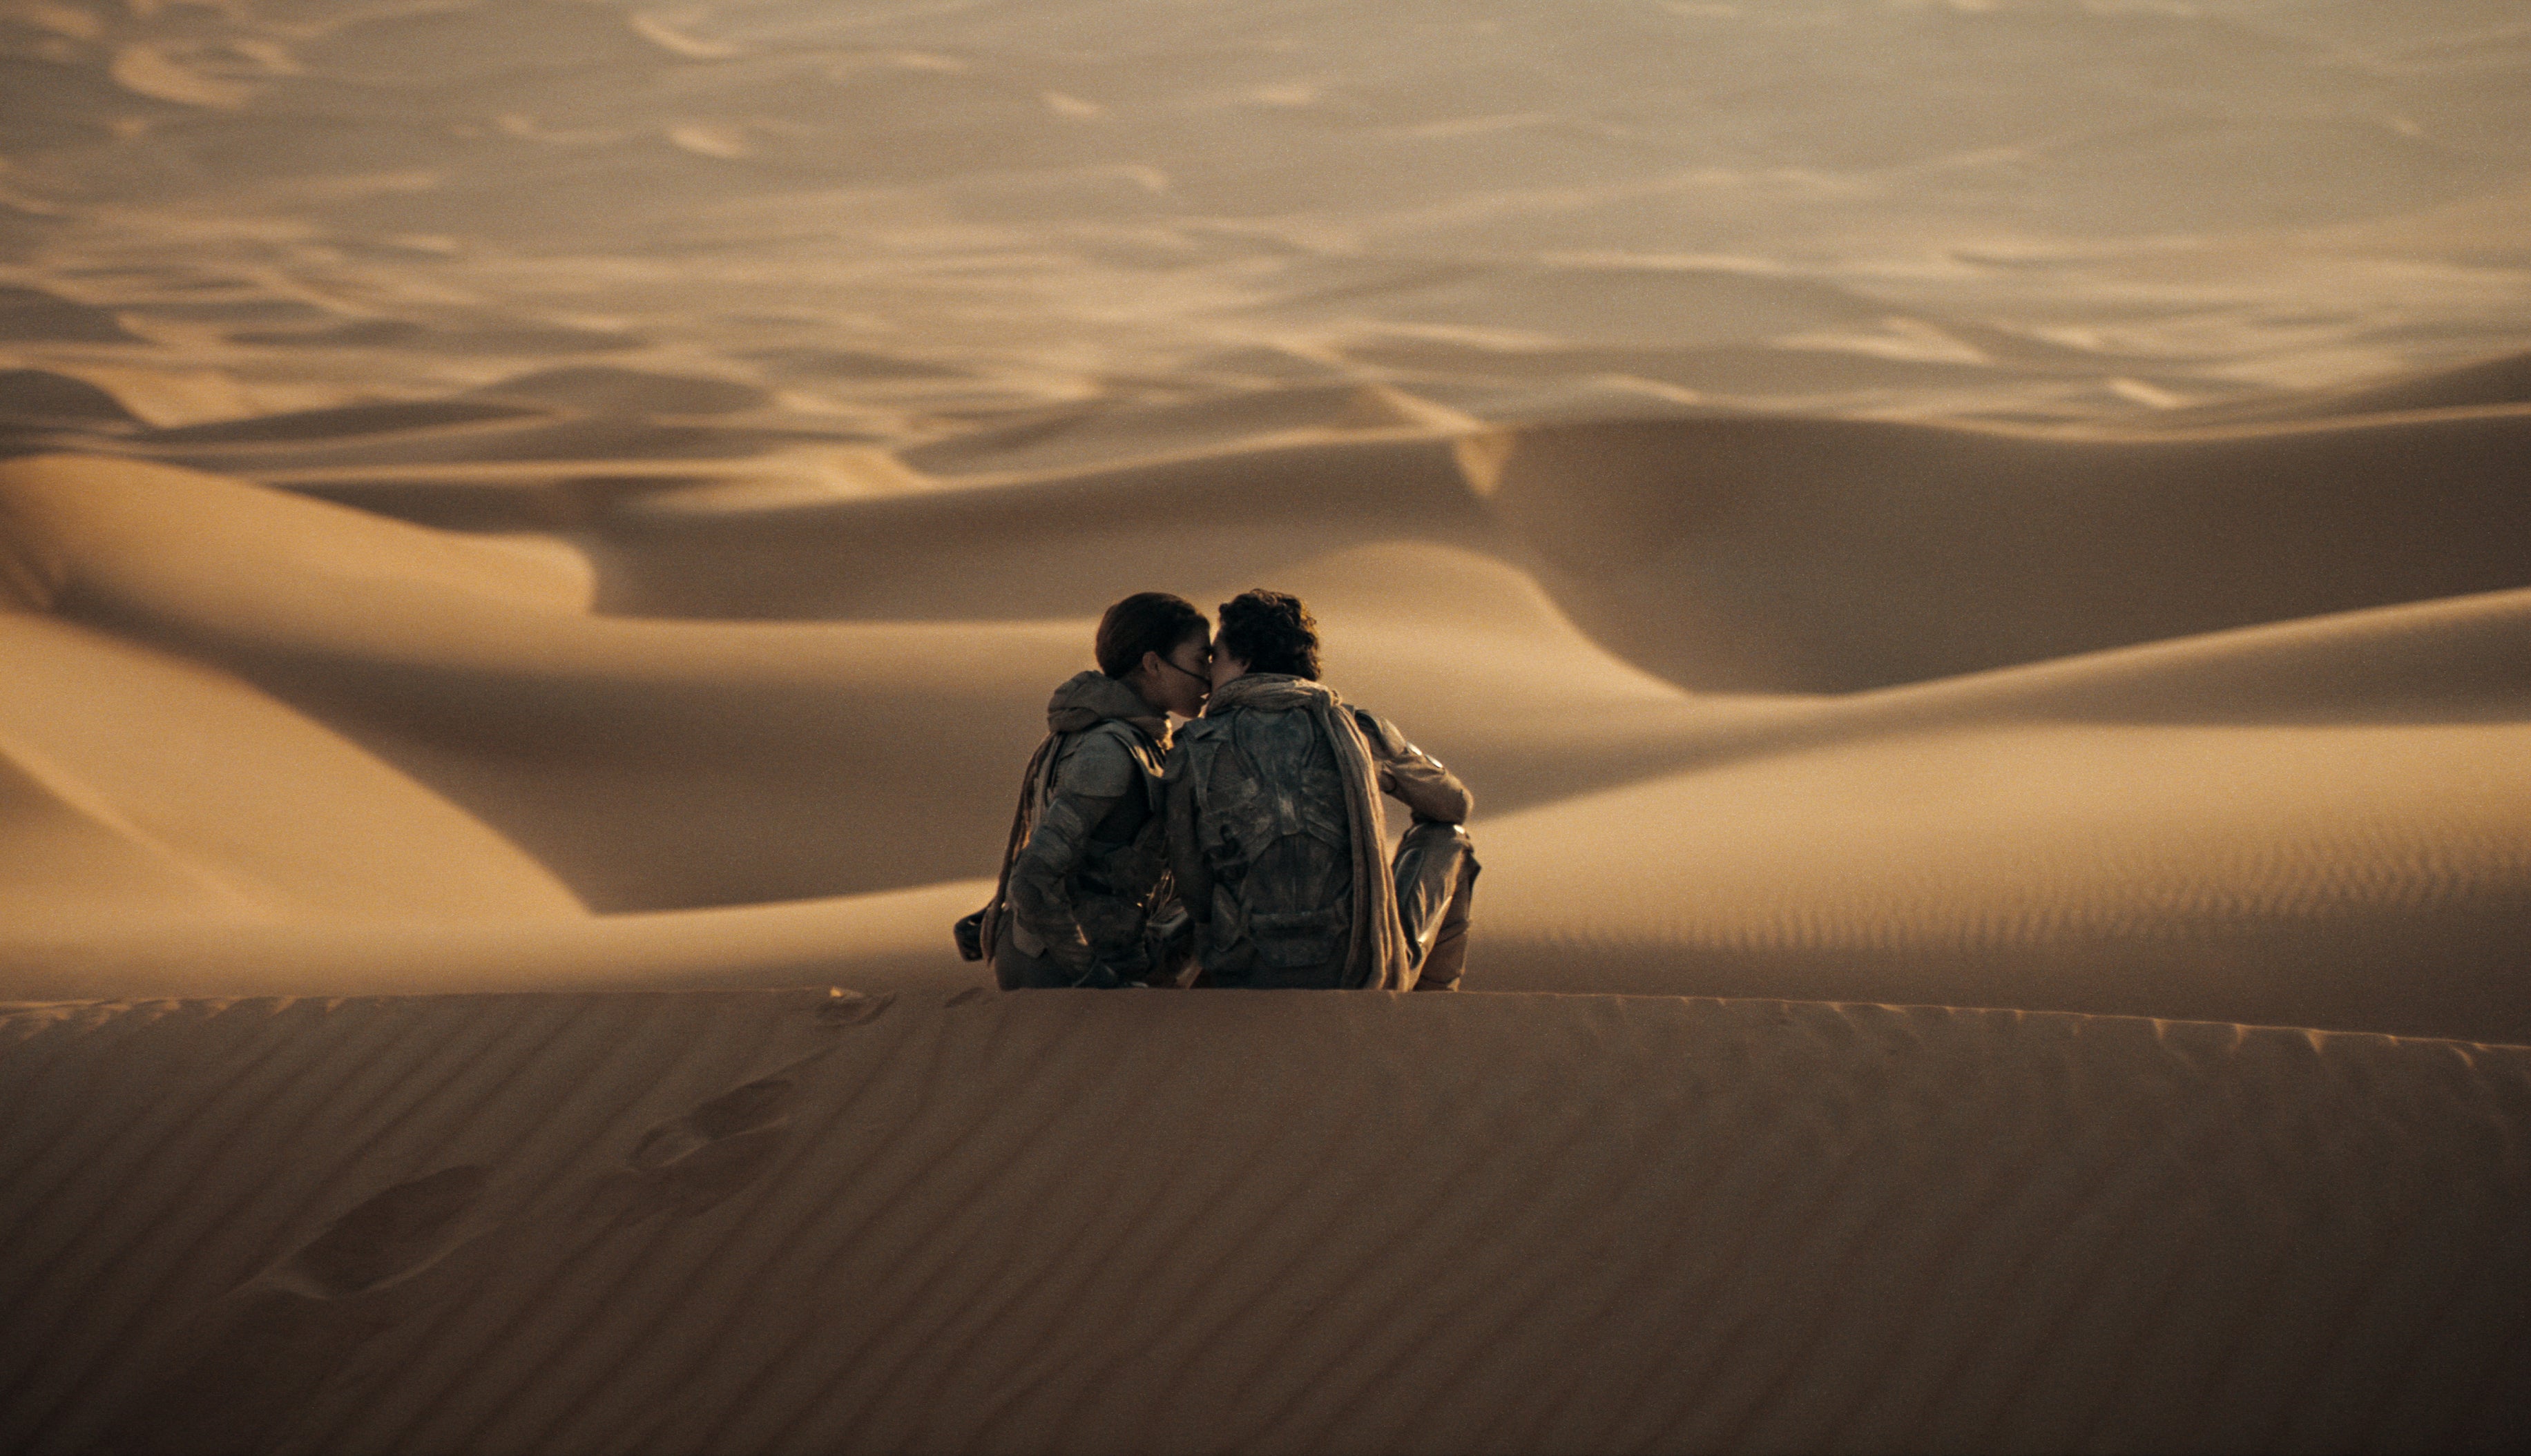 Paul and Chani kissing amidst desert dunes